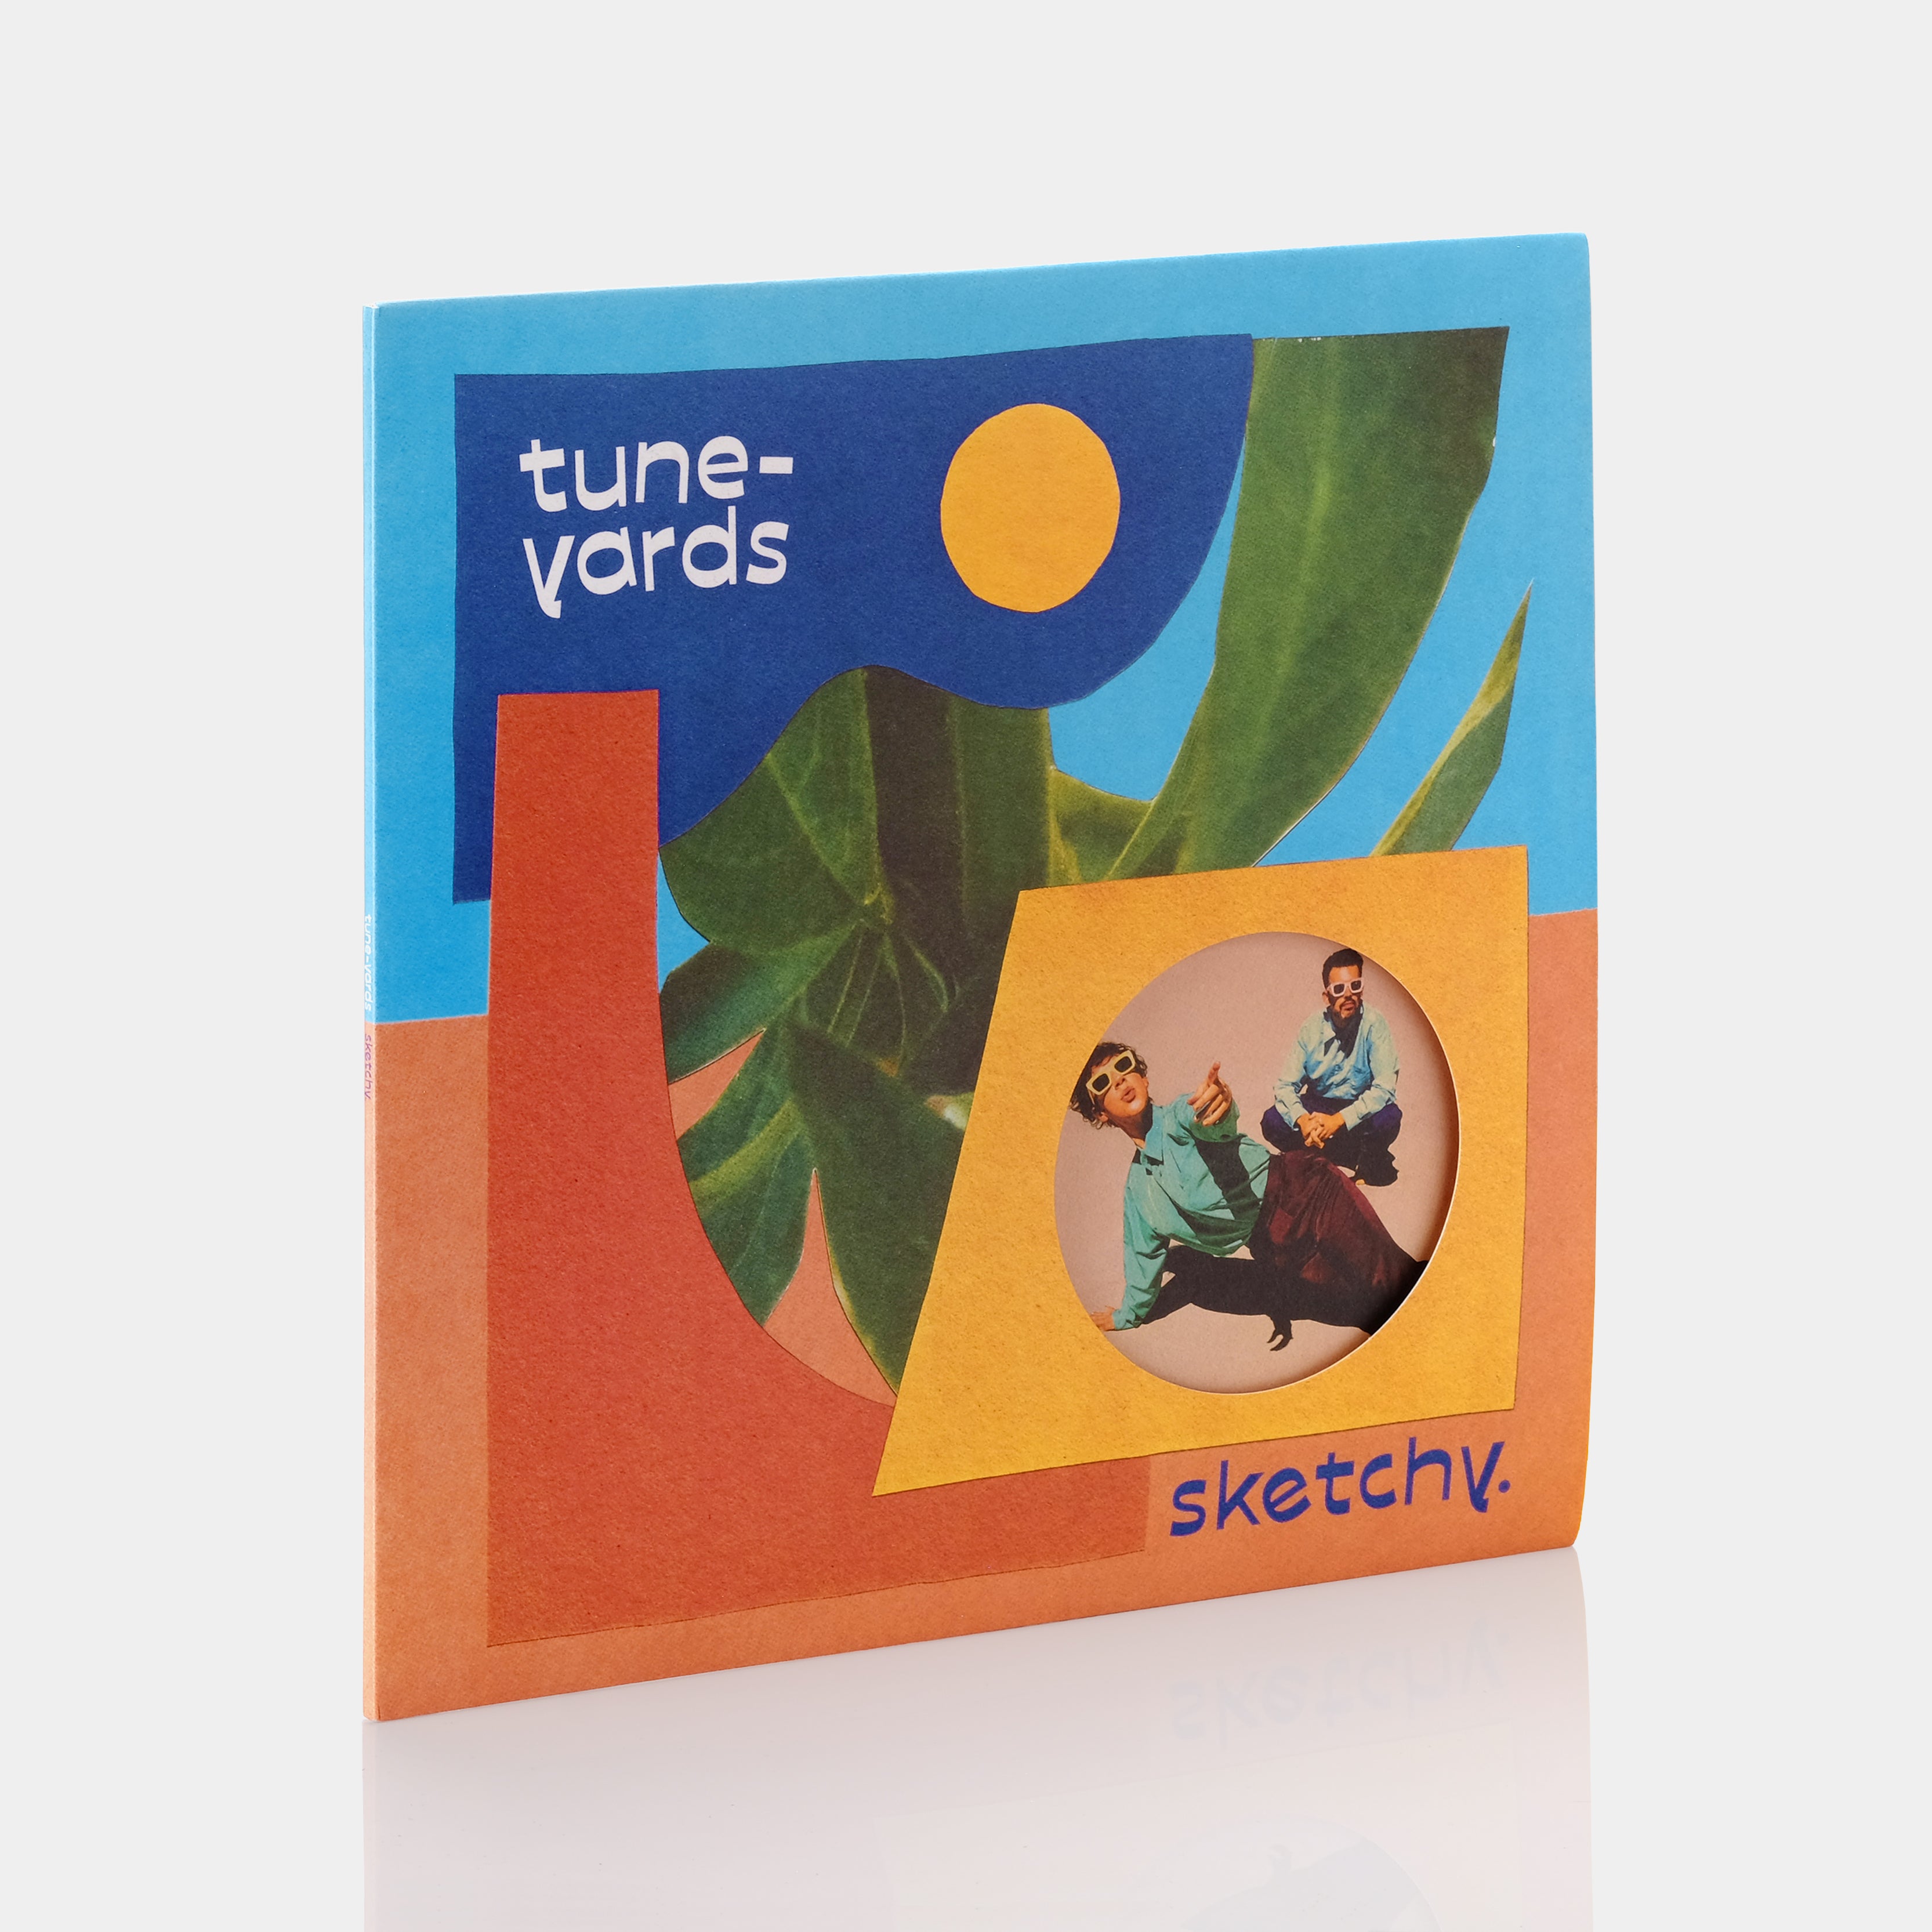 Tune-Yards - Sketchy. LP Yellow Vinyl Record